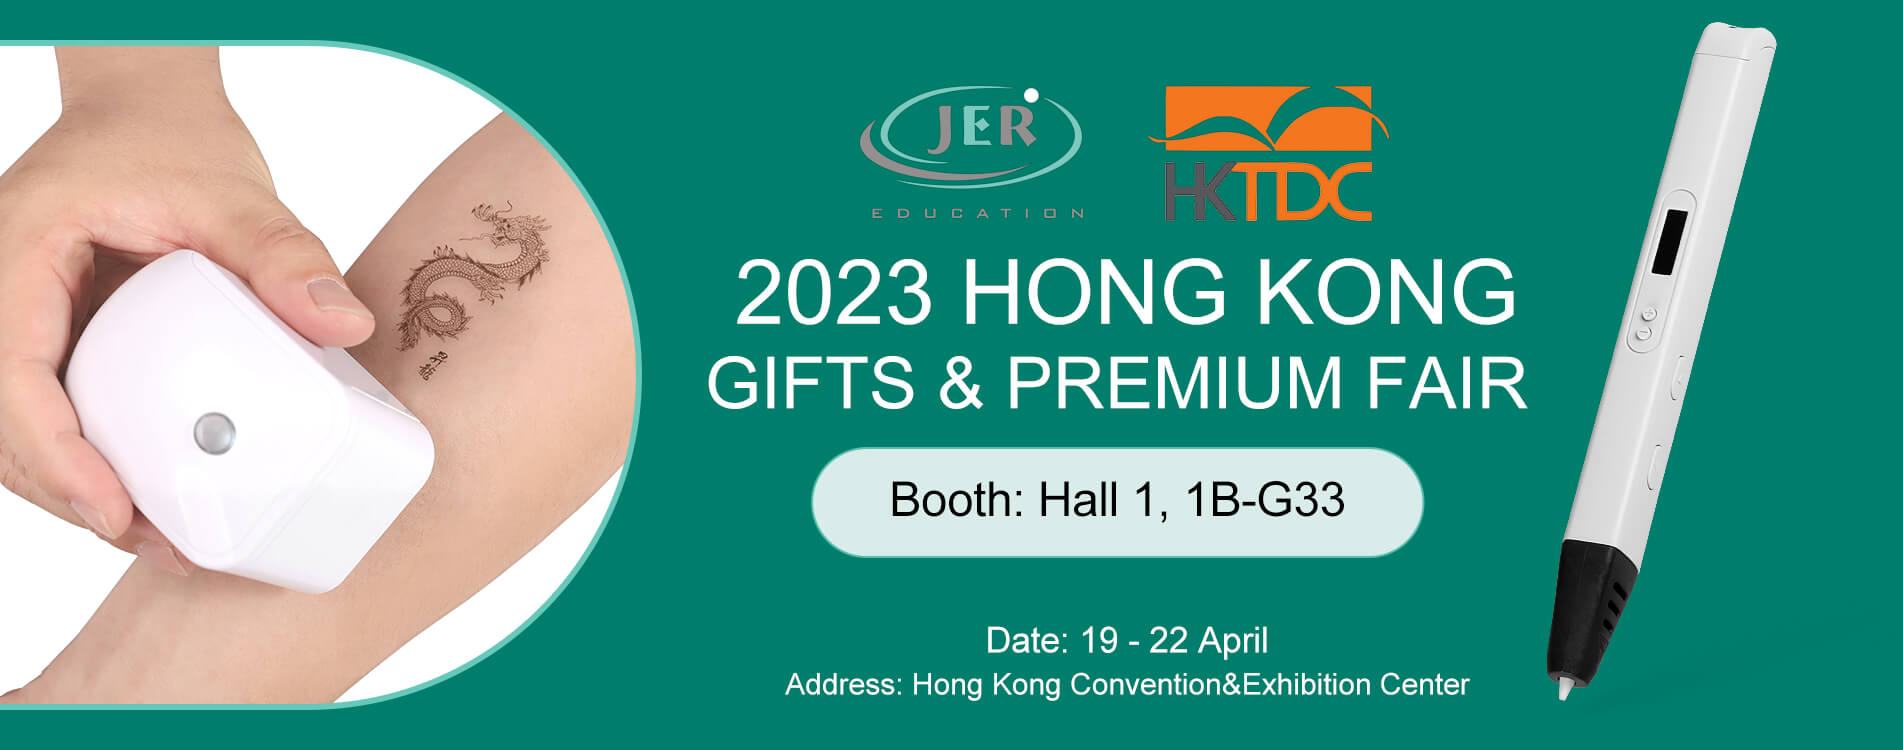 JER Education welcomes you to 2023 Hong Kong Electronics Fair 